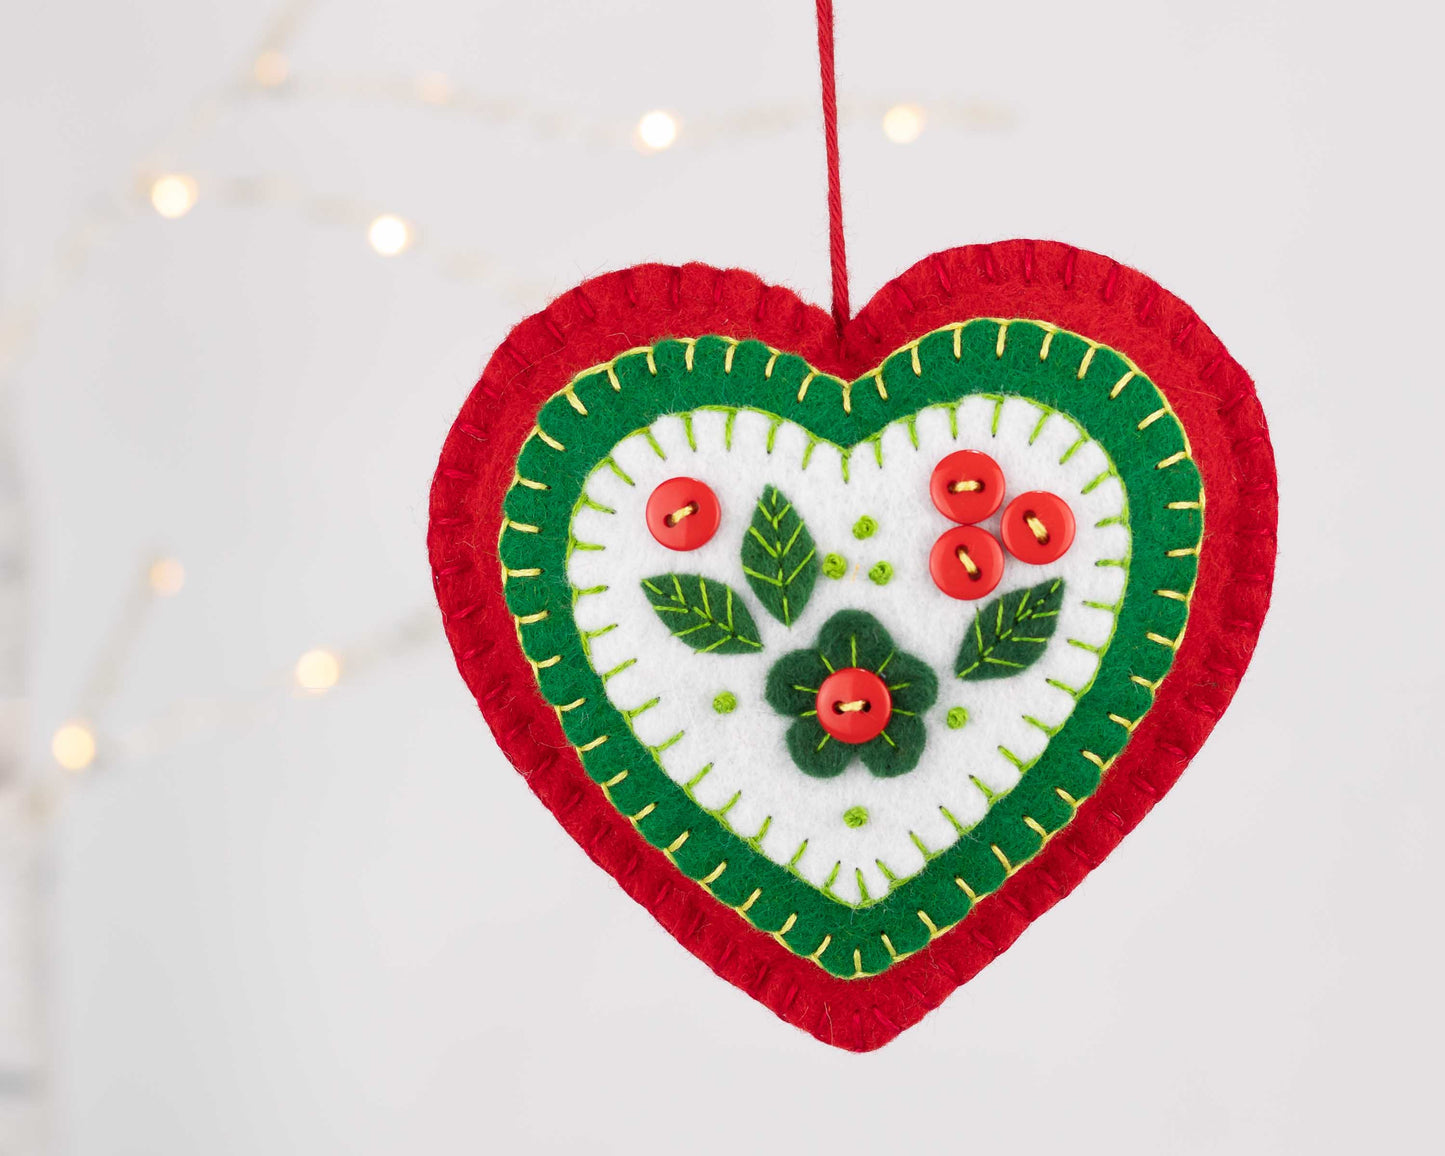 Heart Christmas Ornament PDF Sewing Pattern